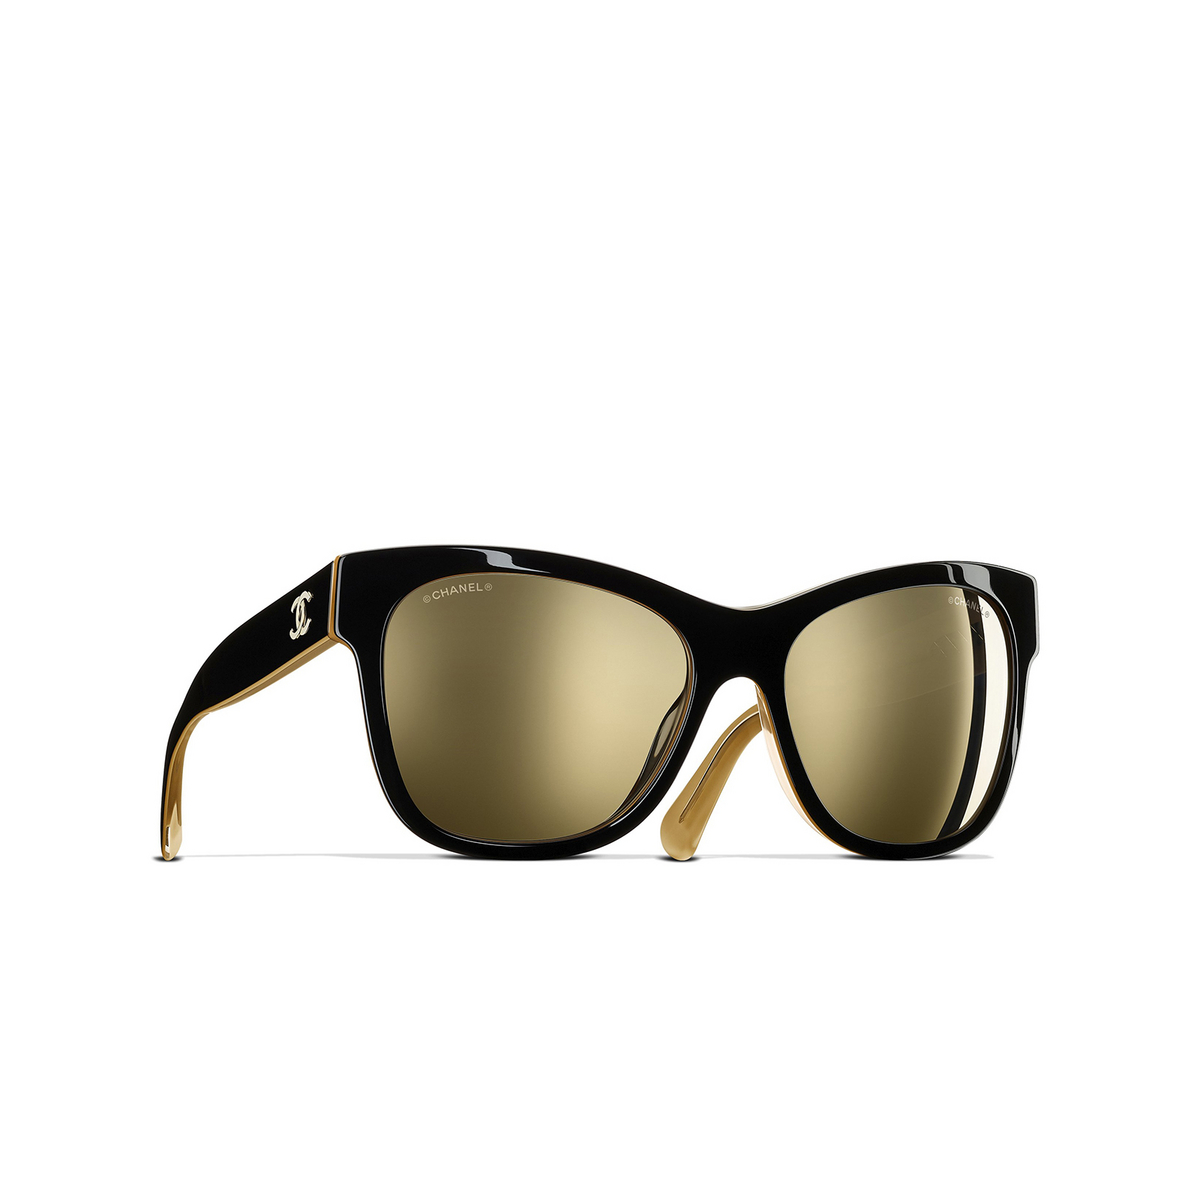 CHANEL square Sunglasses 1609/5A Black & Gold - three-quarters view